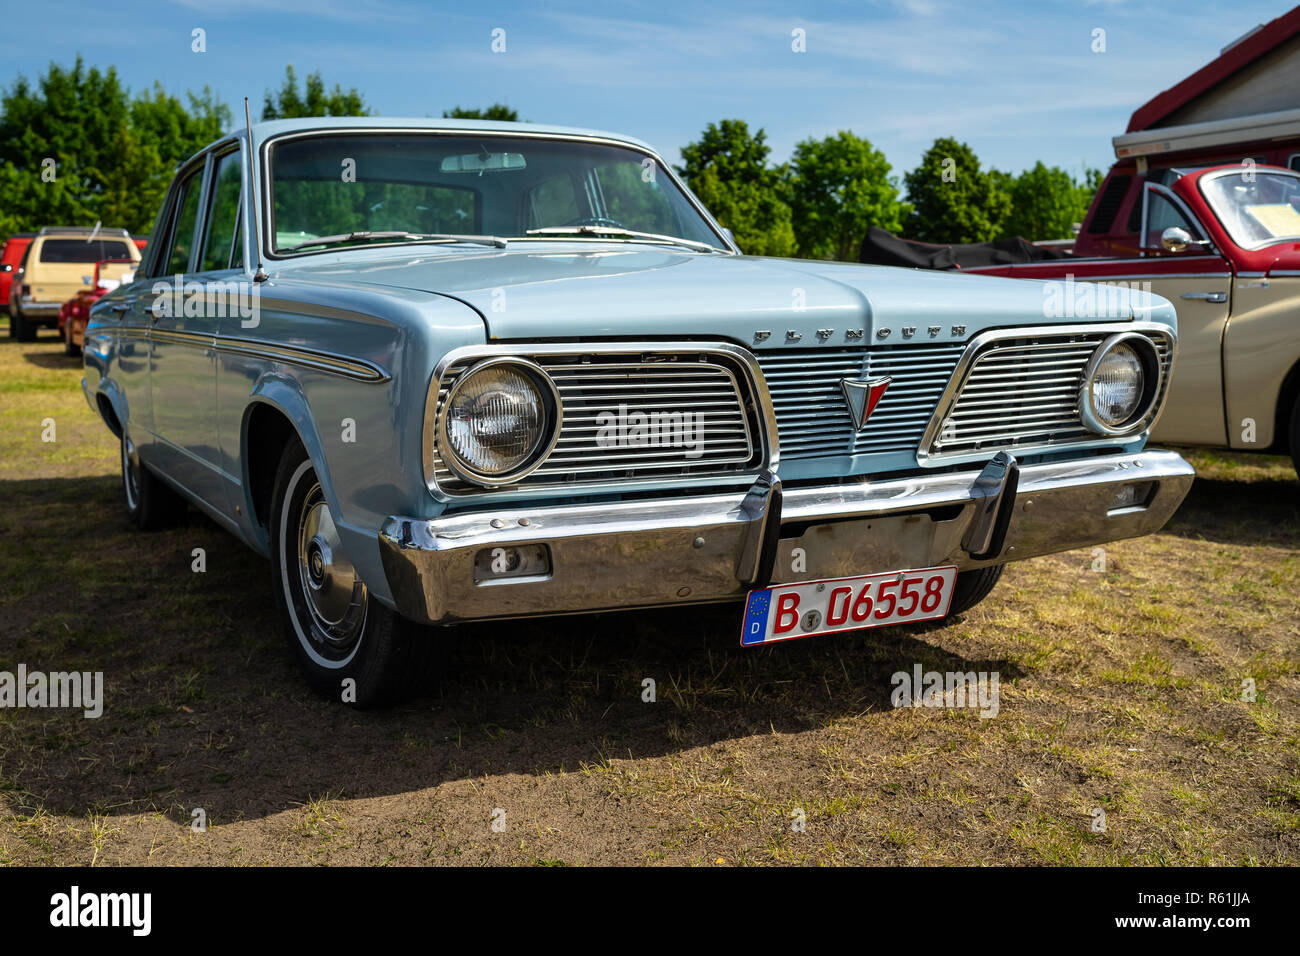 PAAREN IM GLIEN, Germania - 19 Maggio 2018: vettura compatta Plymouth Valiant 200, 1966. Mostra 'Die Oldtimer Show 2018". Foto Stock